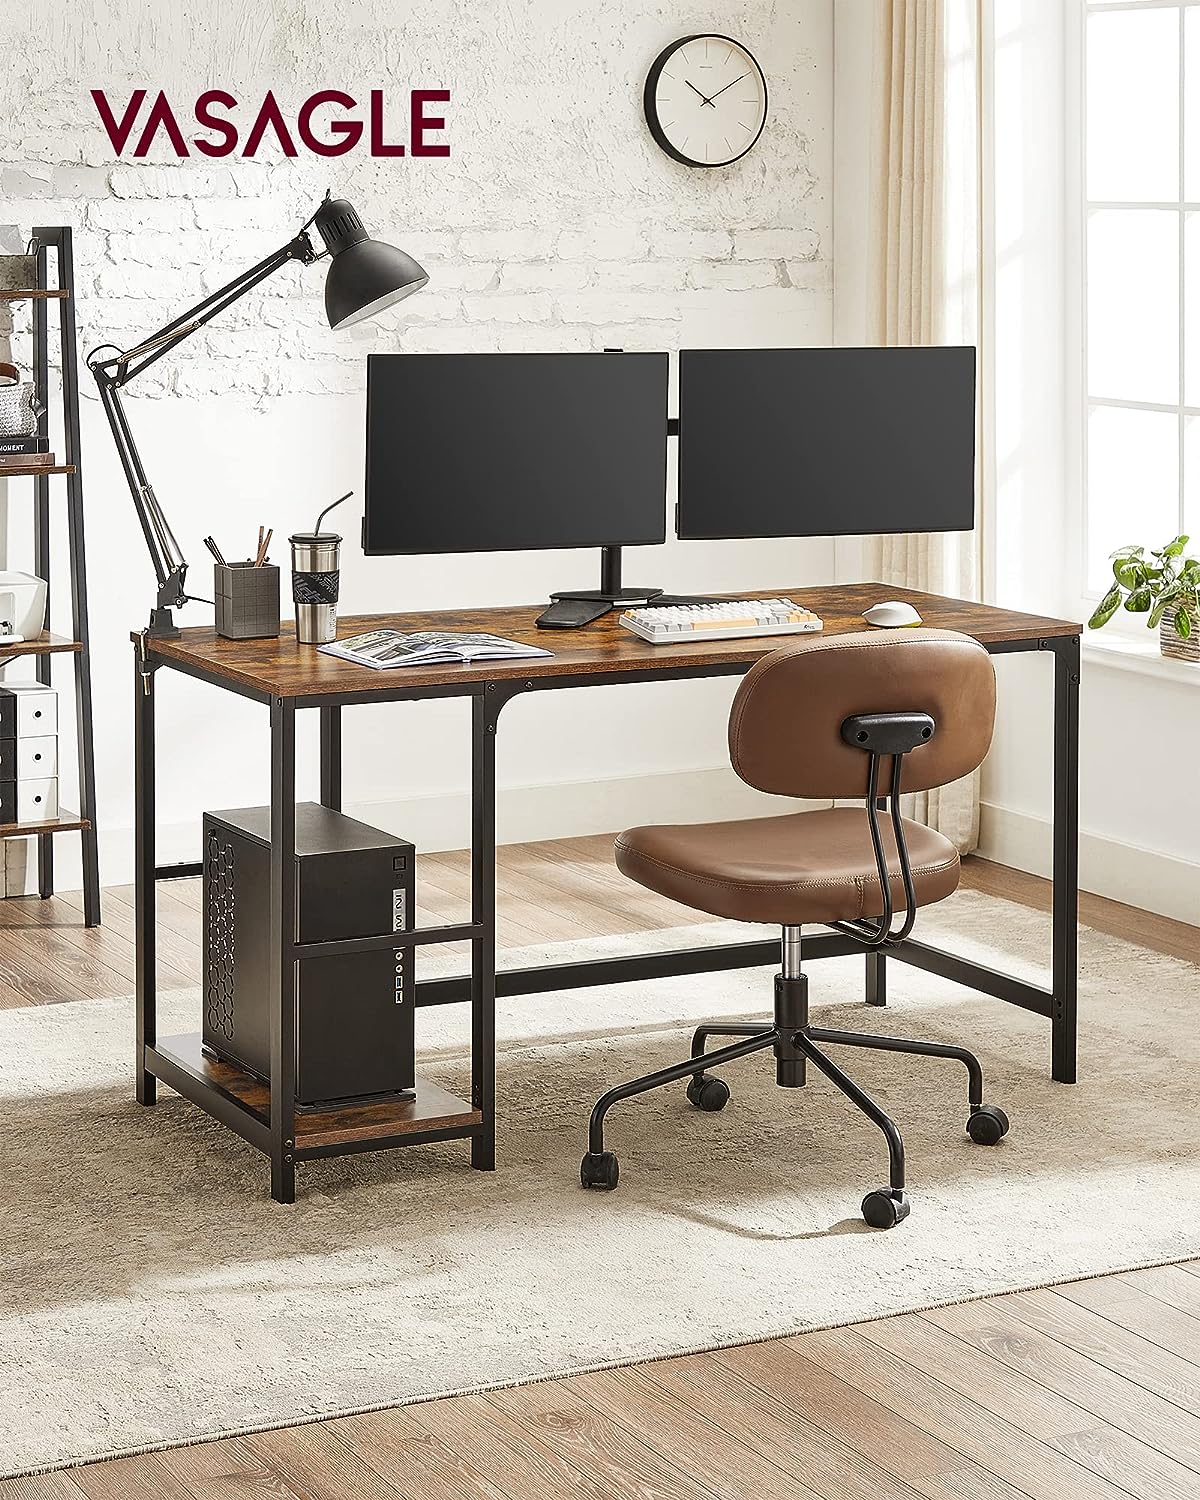 VASAGLE ALINRU Computer Desk, 55.1-Inch Wide Home Office Desk - $95